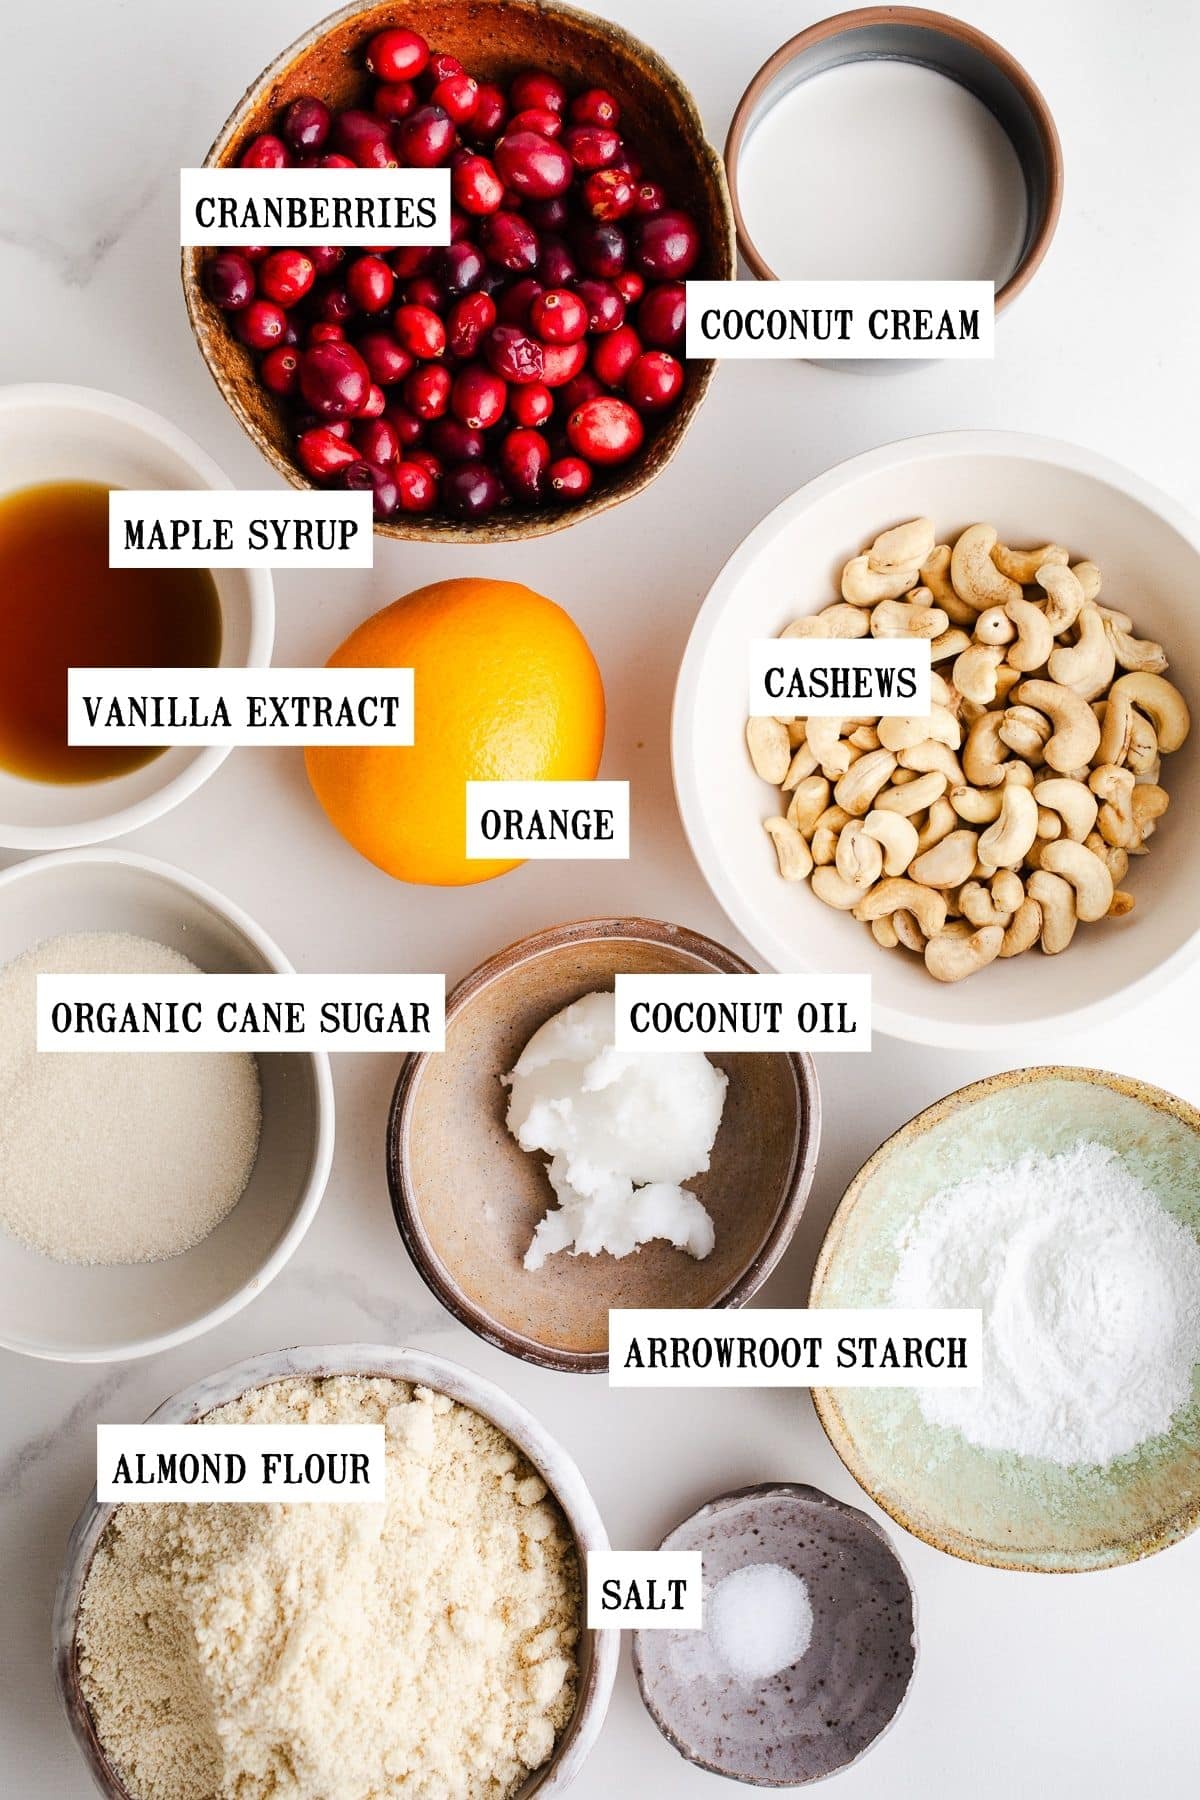 Ingredients to make a cranberry tart.